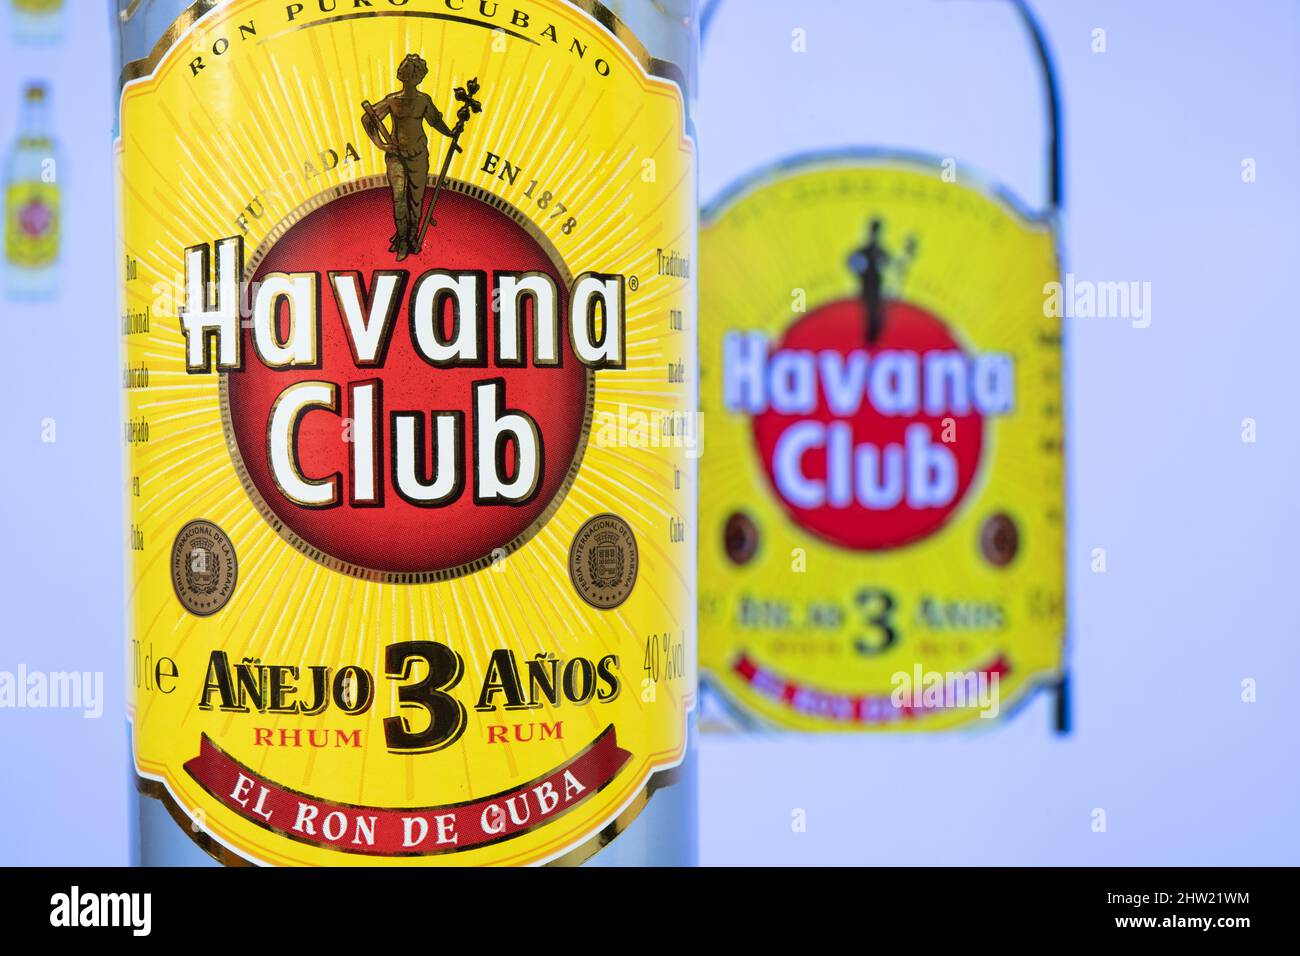 Bottle and label of Havana Club rum Stock Photo - Alamy